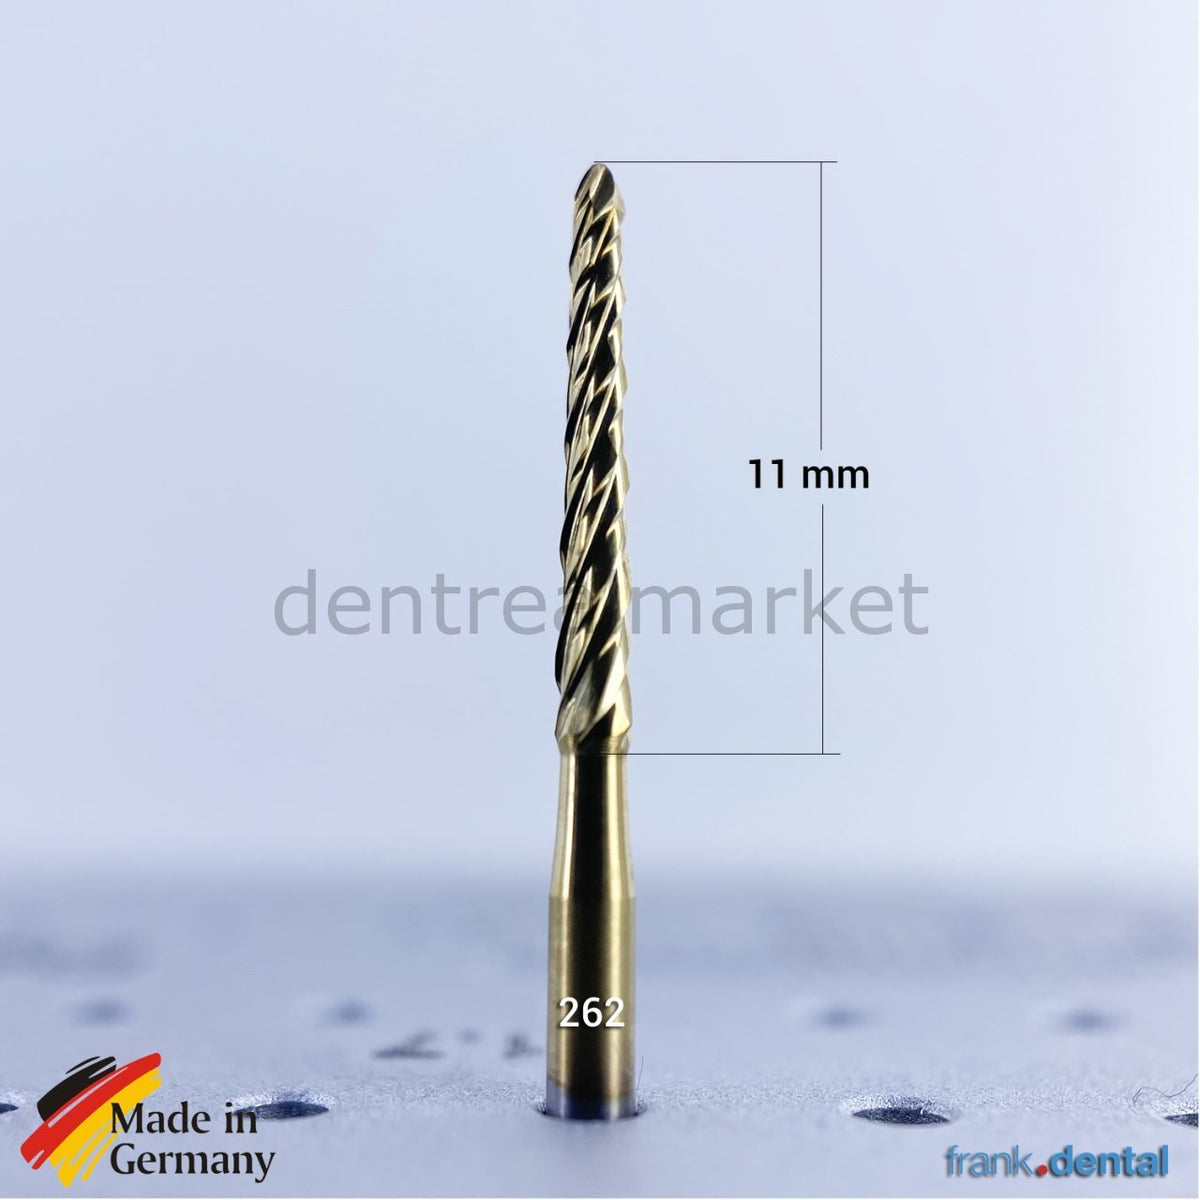 DentrealStore - Frank Dental Titanium Carpide Lindemann Surgical Bur - 262